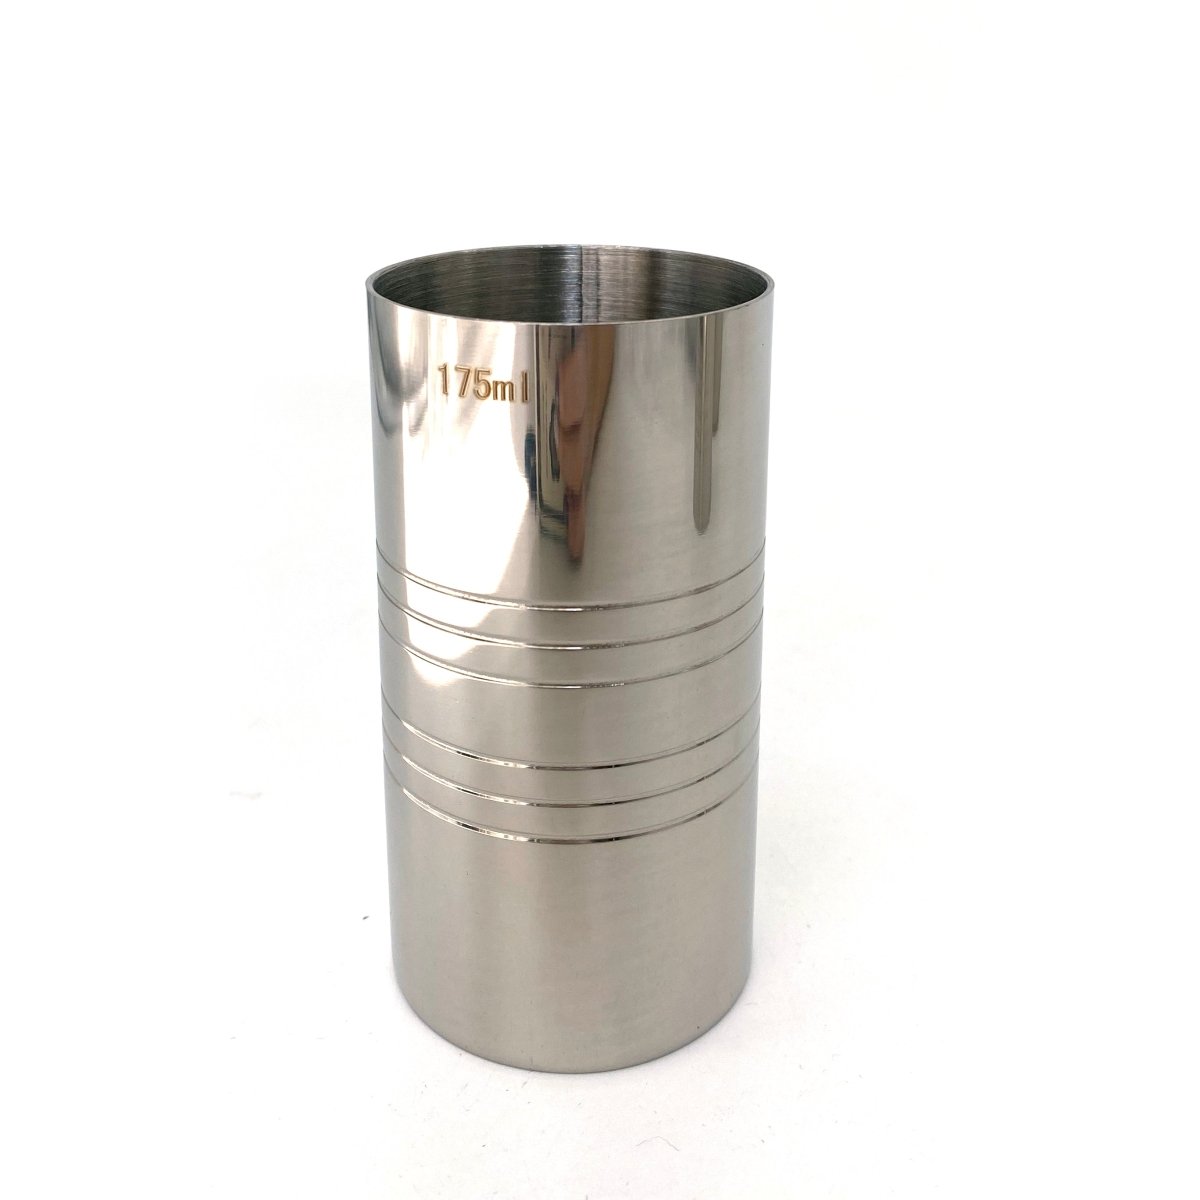 Stainless Steel Thimble Measure 175ml 6oz - Easiley - THMB1011-8